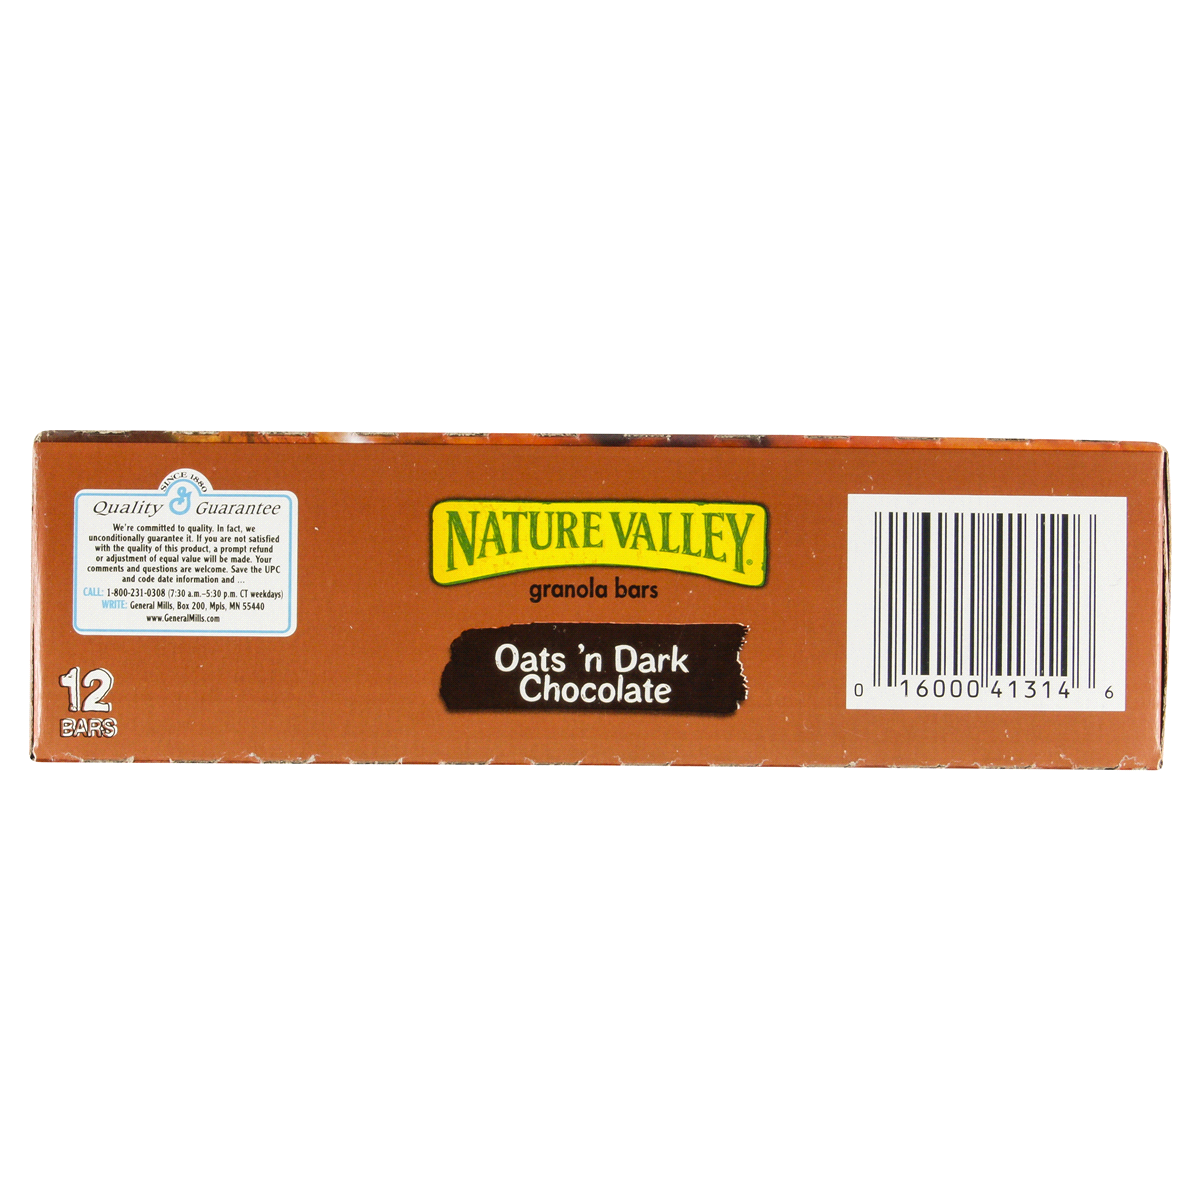 slide 100 of 137, Nature Valley Crunchy Granola Bars, Oats 'n Dark Chocolate, 6 ct, 12 bars, 6 ct